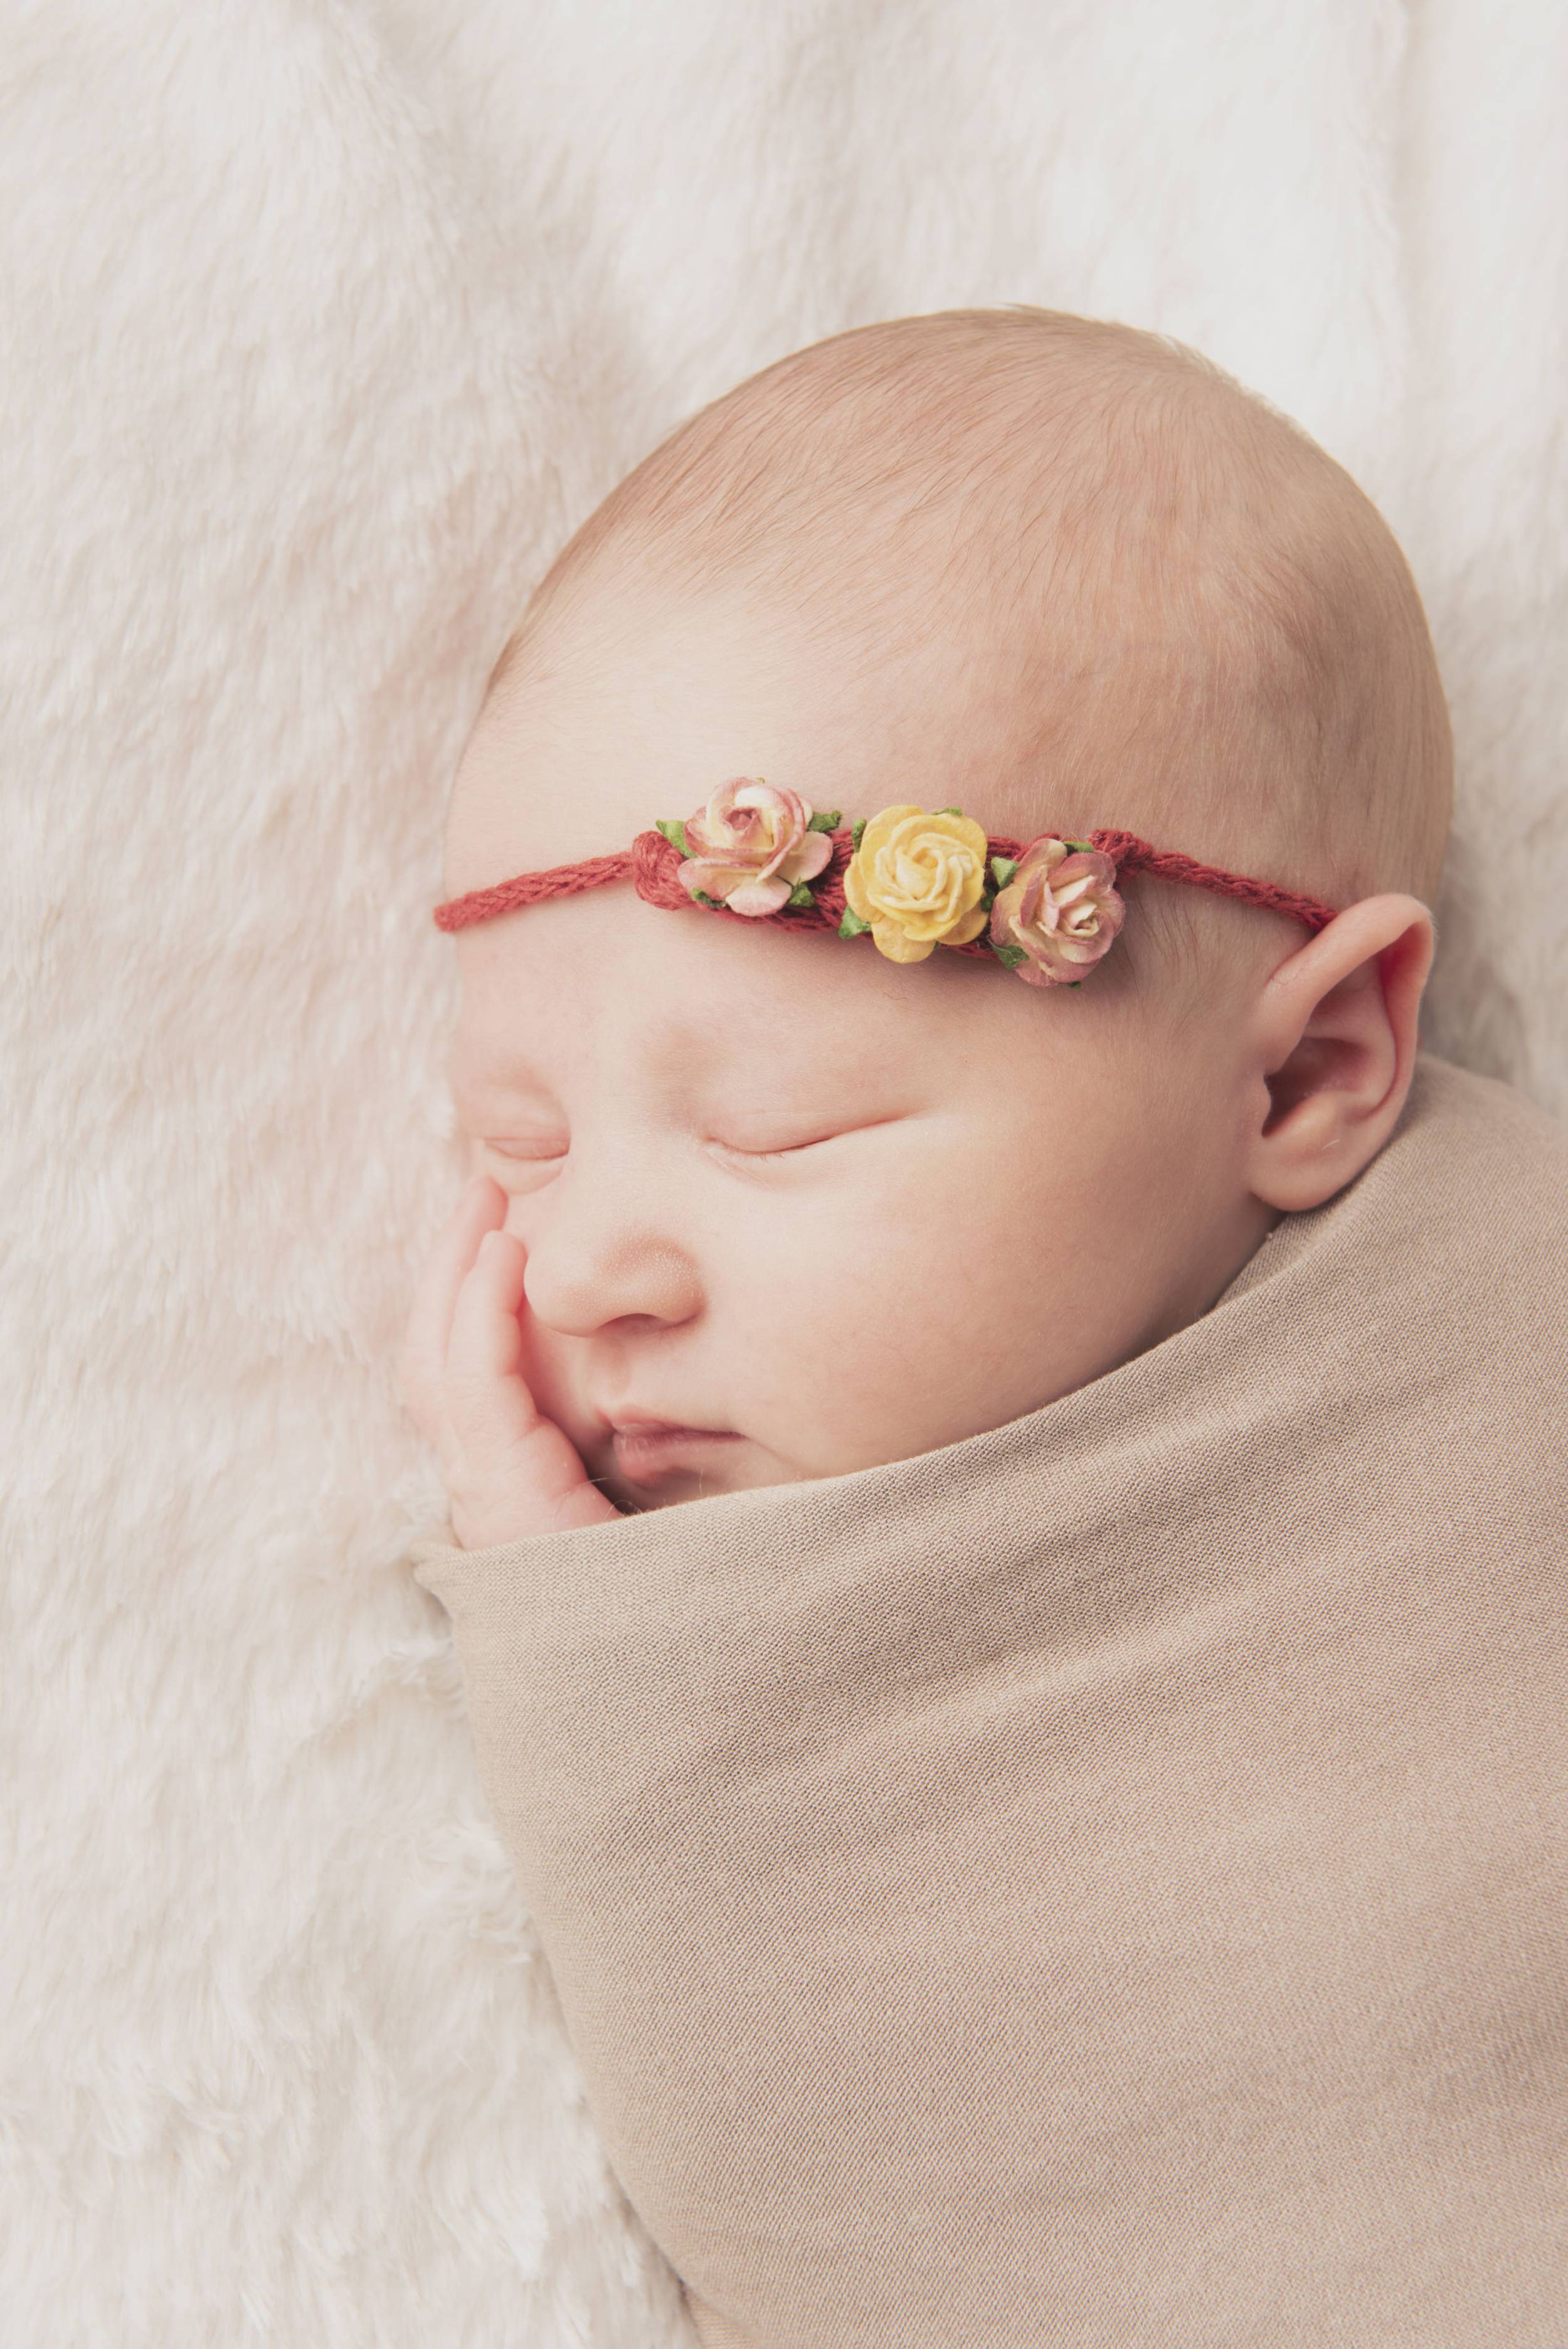 Happix-fotograaf-Bianca-Oosterhout-Newborn-_-Baby-fotografie-047_shyS69XXhp.jpg